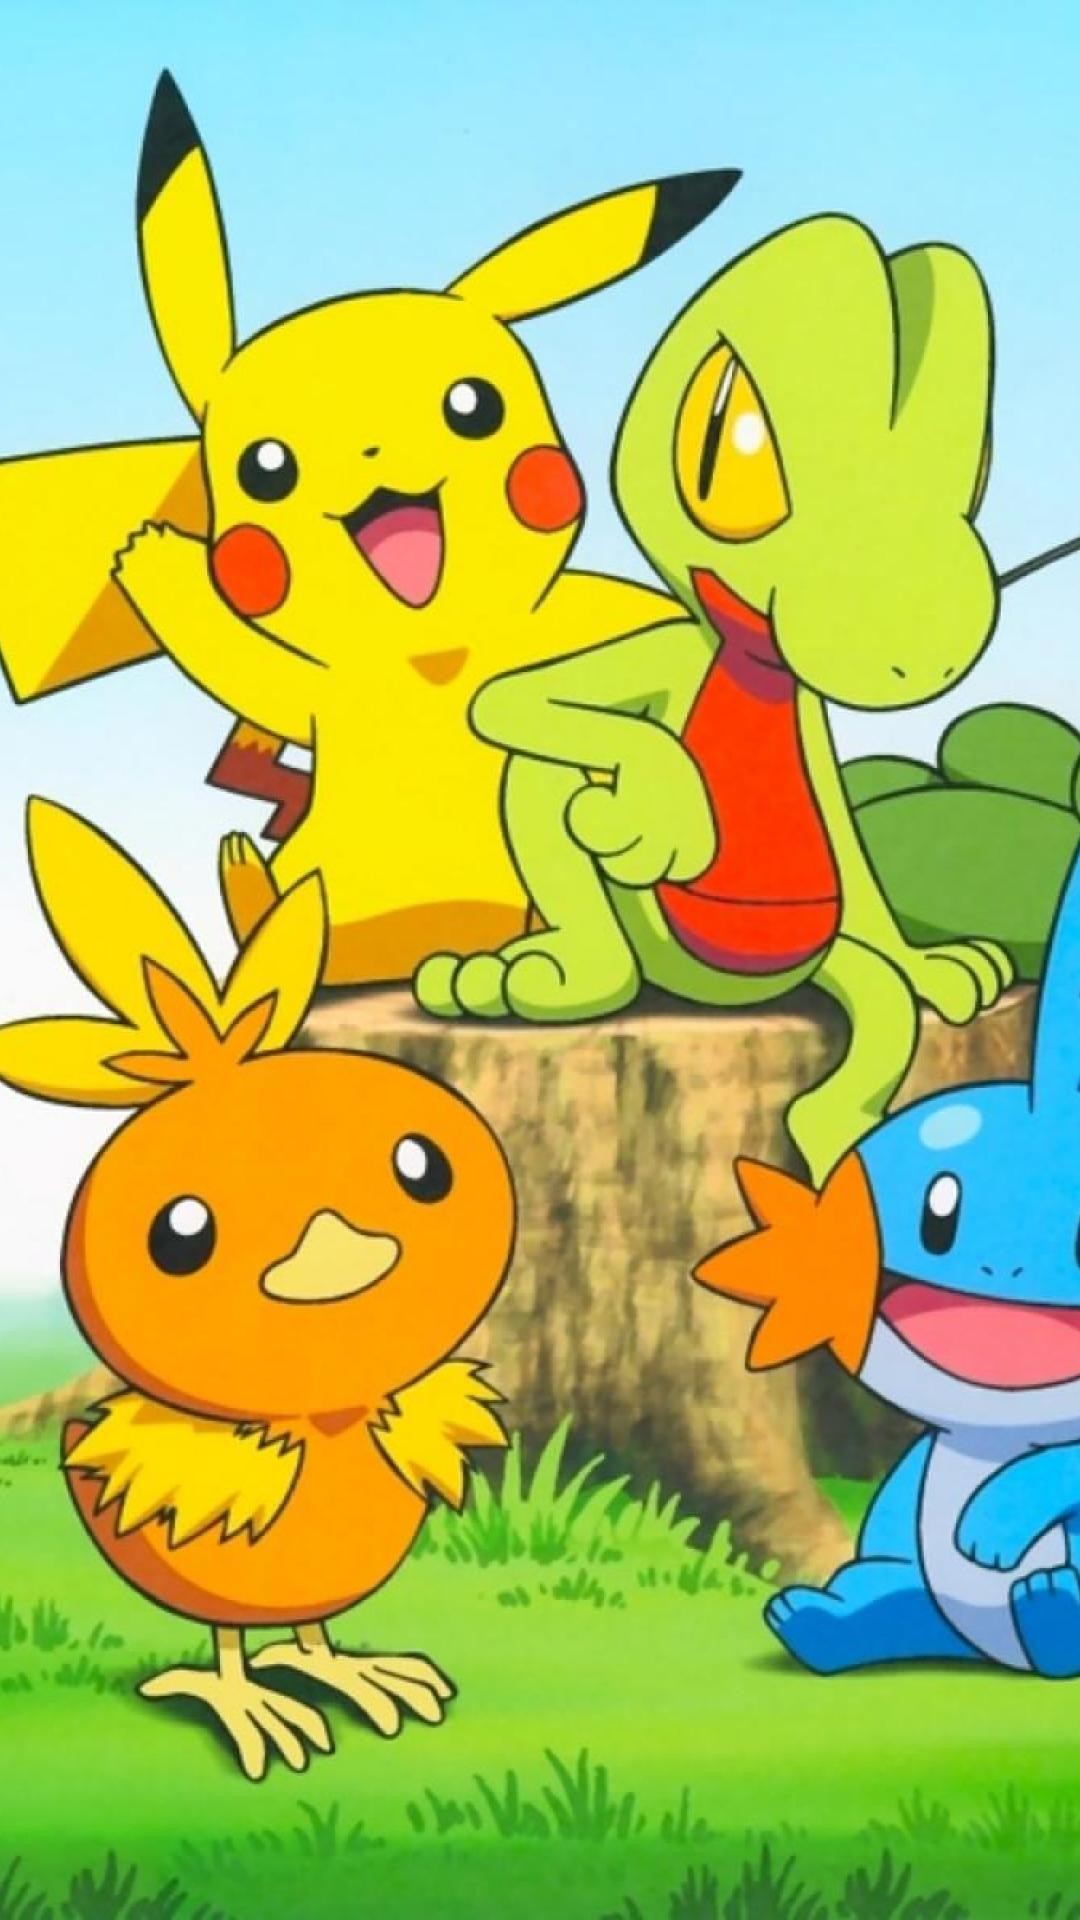 Pikachu HD wallpaper for iPhone